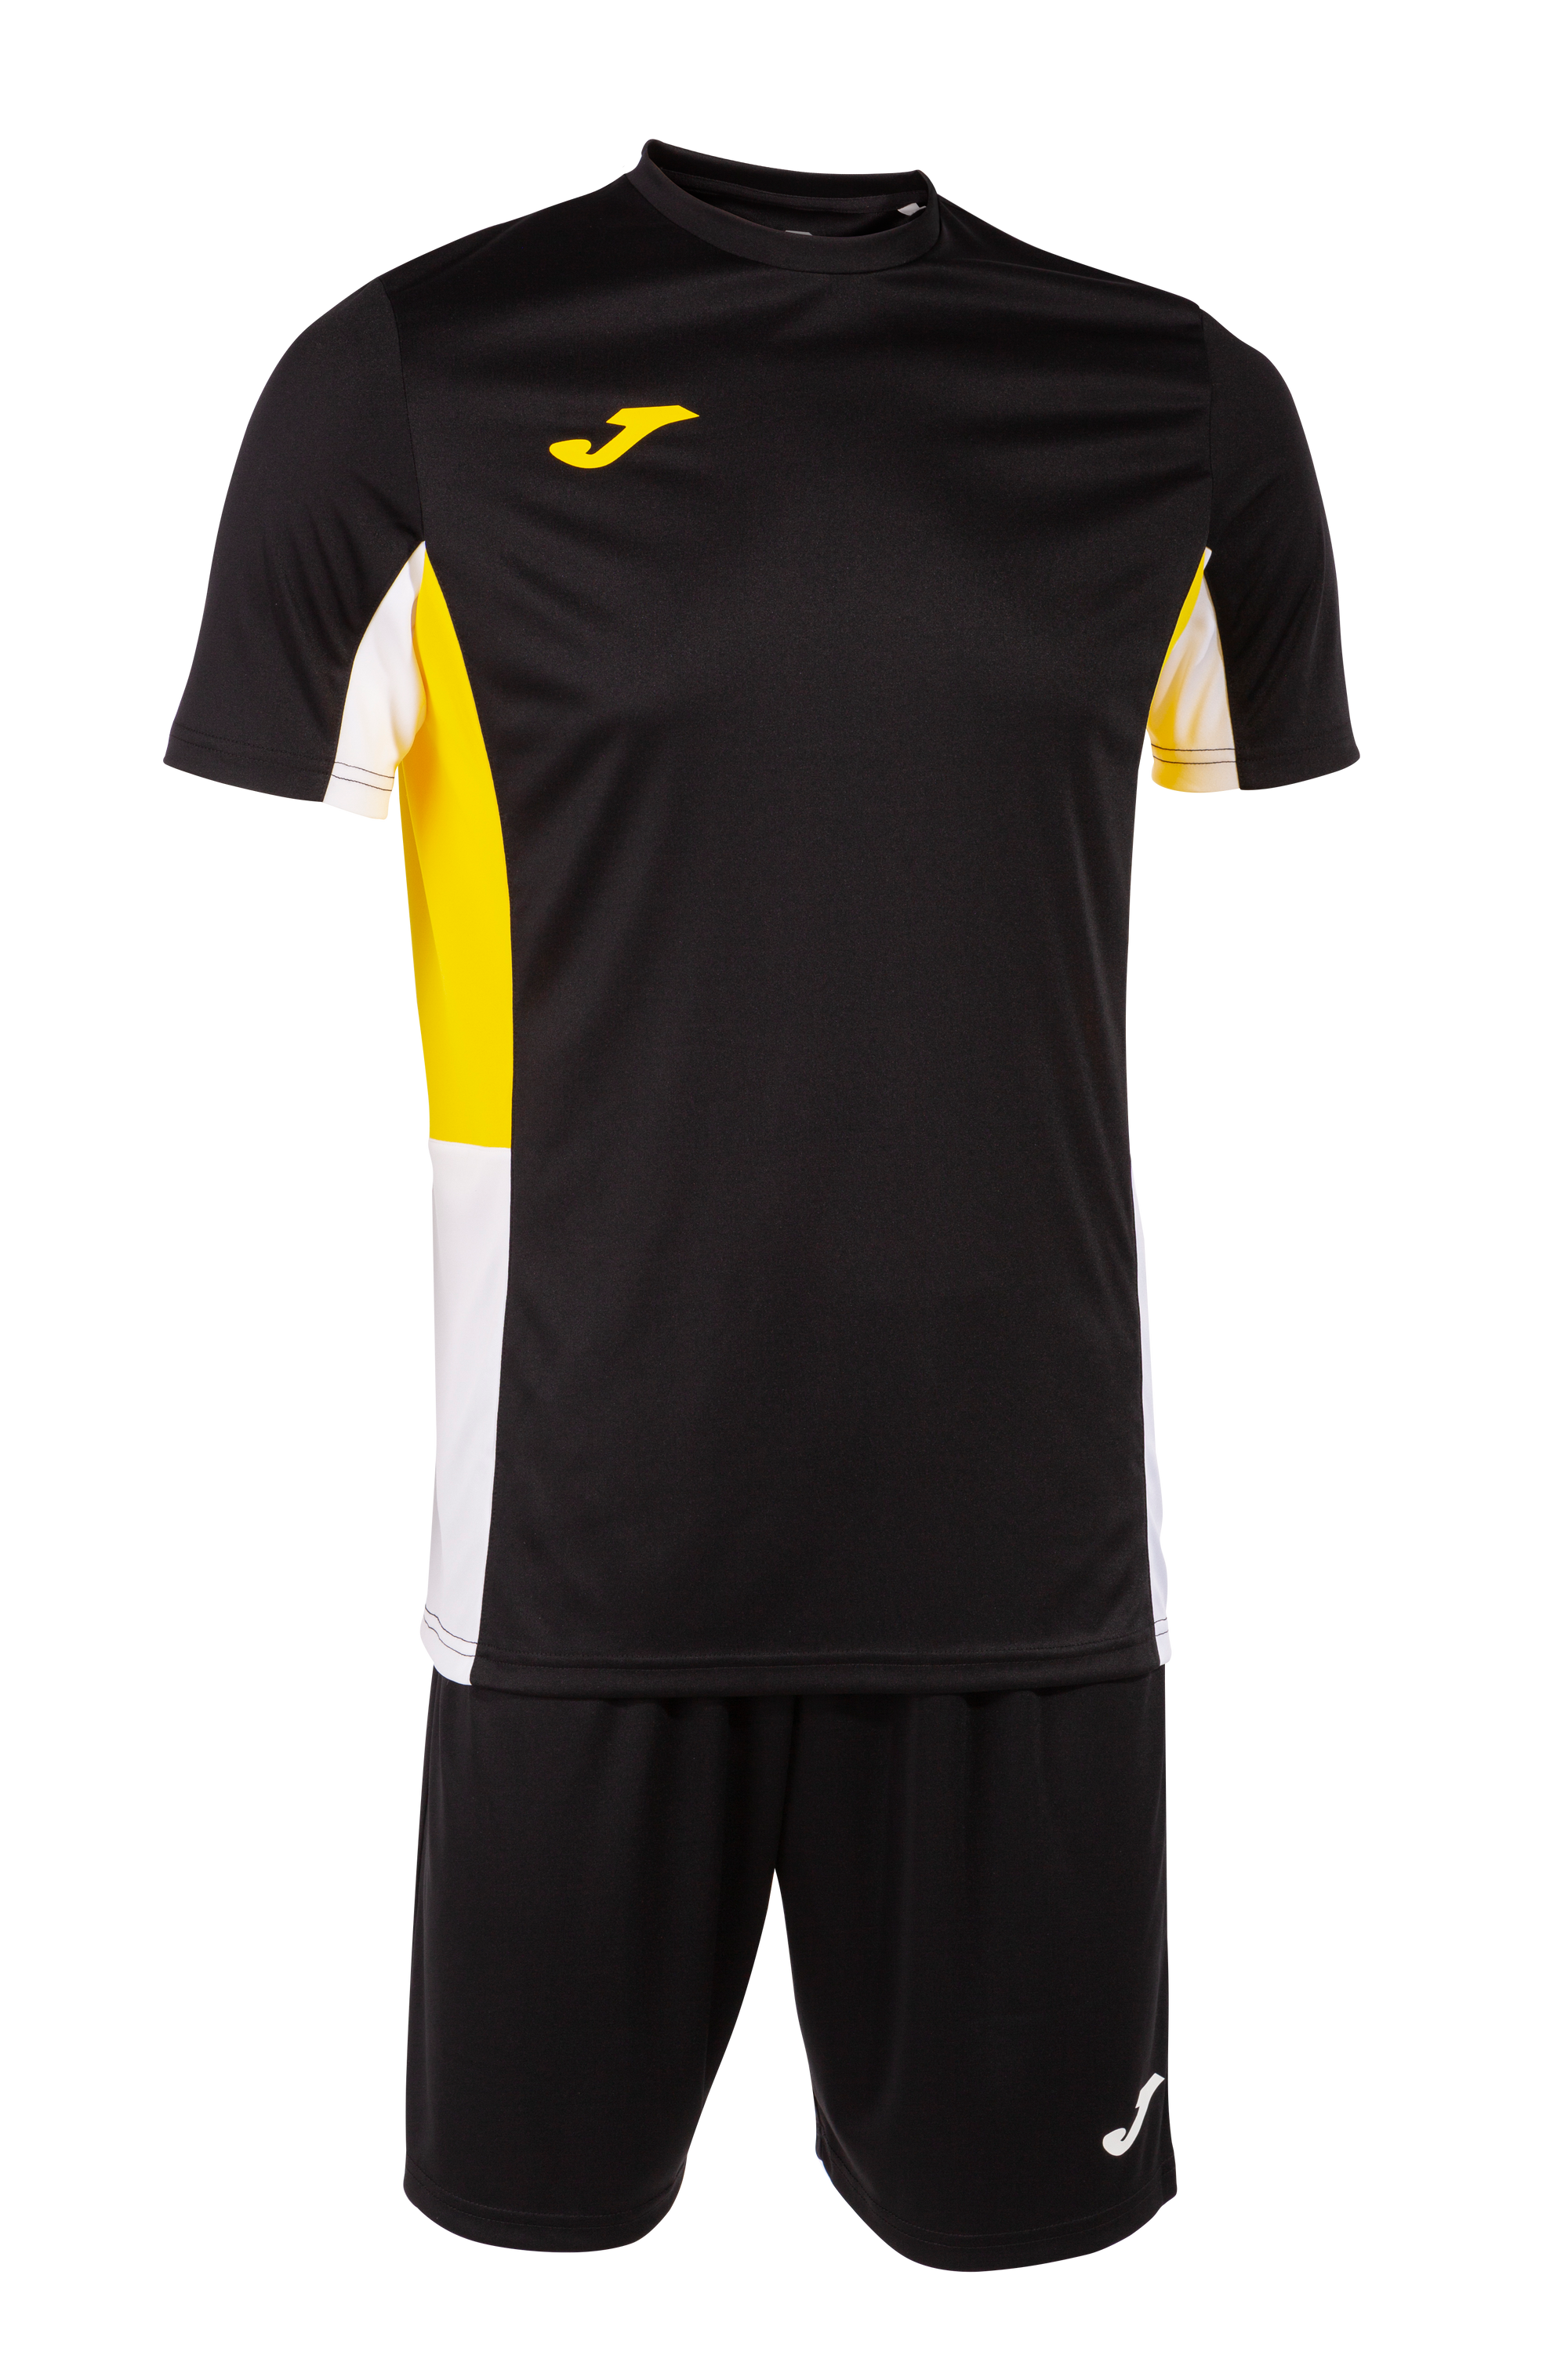 Joma Danubio II Kit Set - Black/Yellow/White